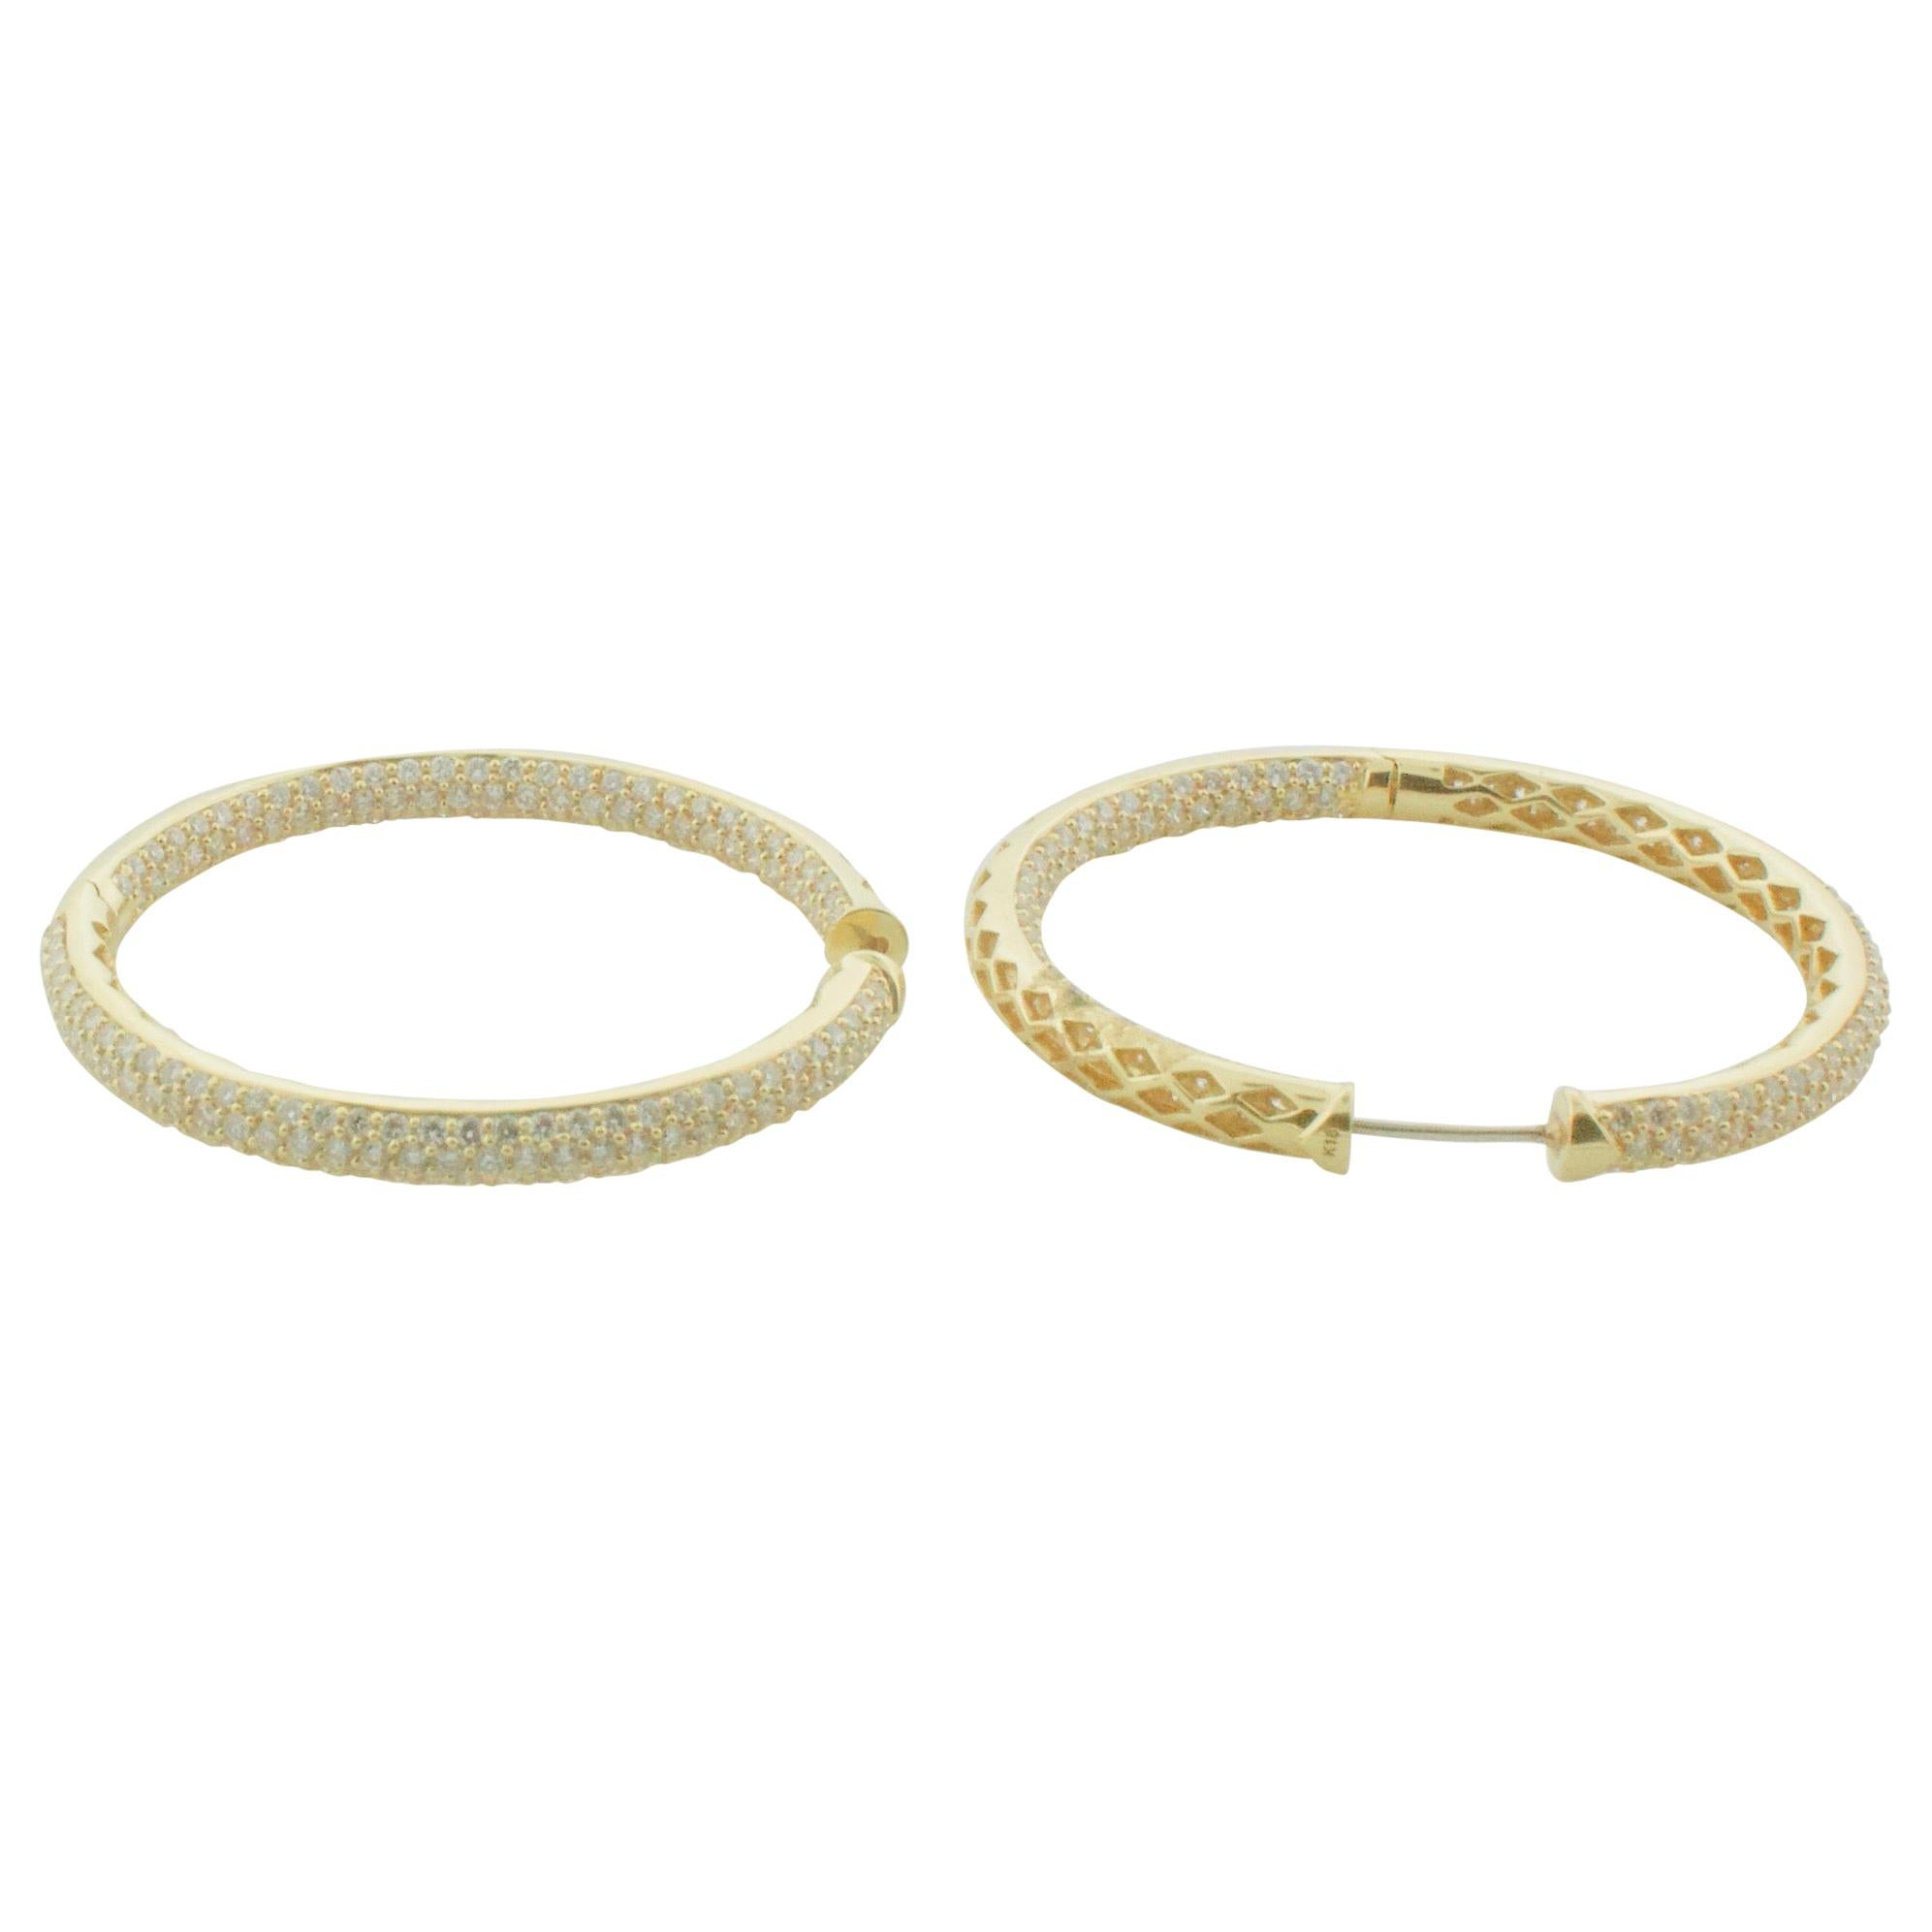 Groovy Large Hoop Pave' Diamond Earrings in 18k Yellow Gold